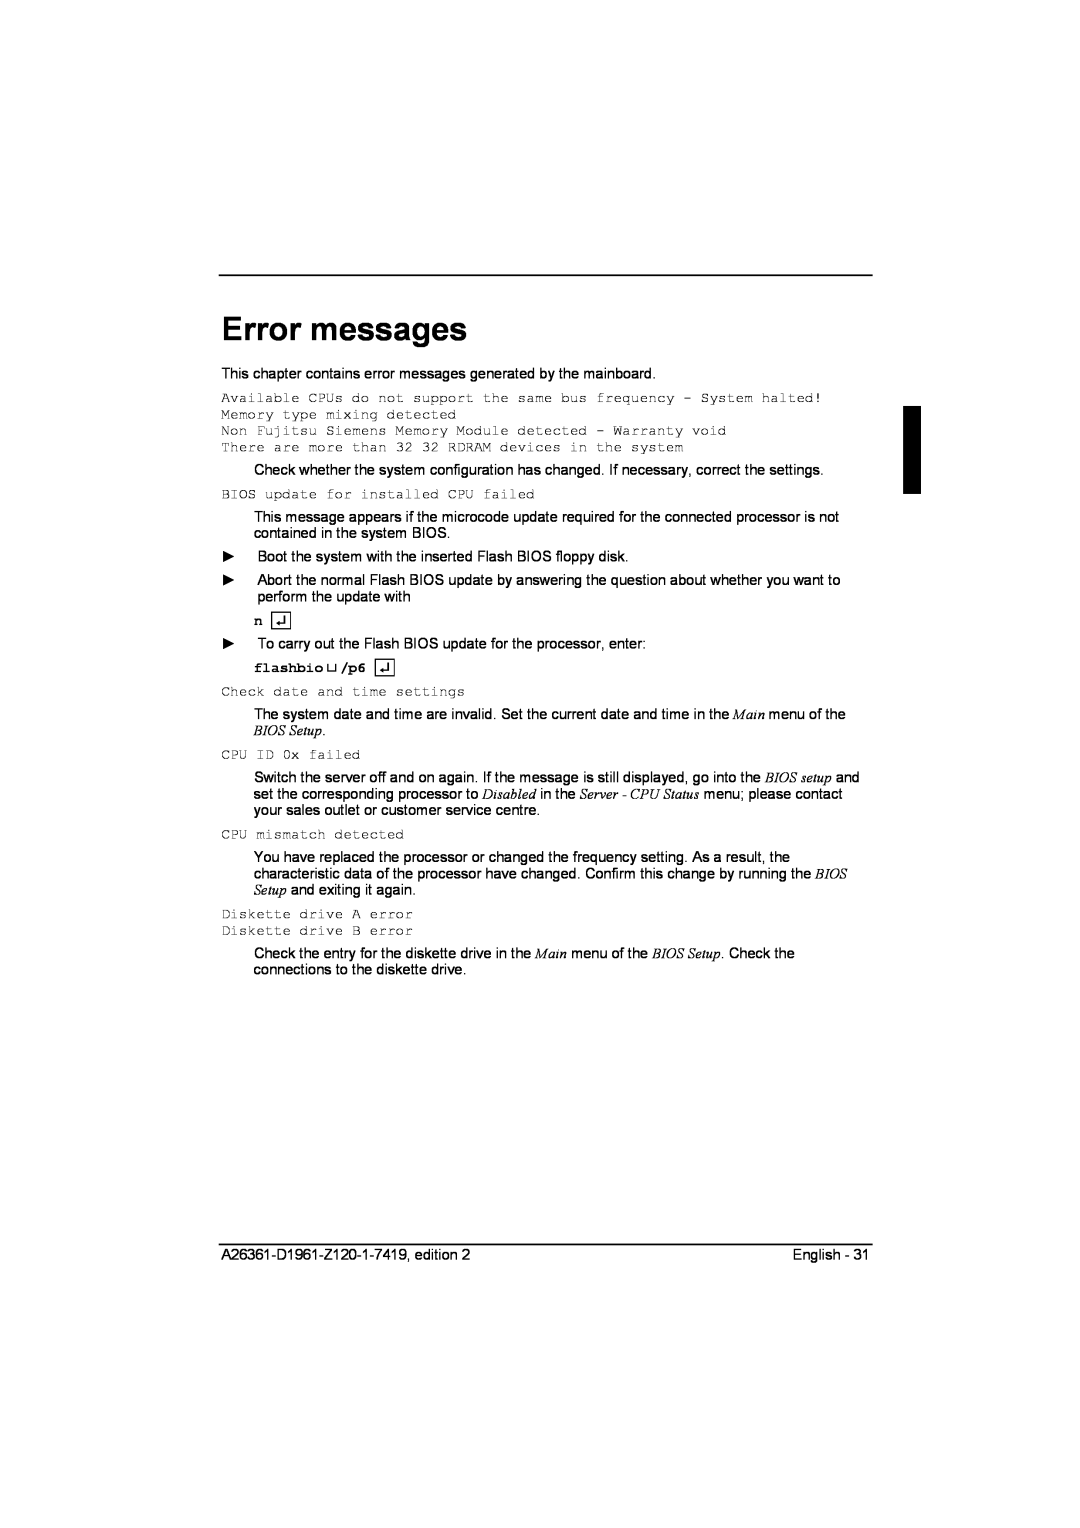 Fujitsu D1961 technical manual Error messages, flashbio/p6 